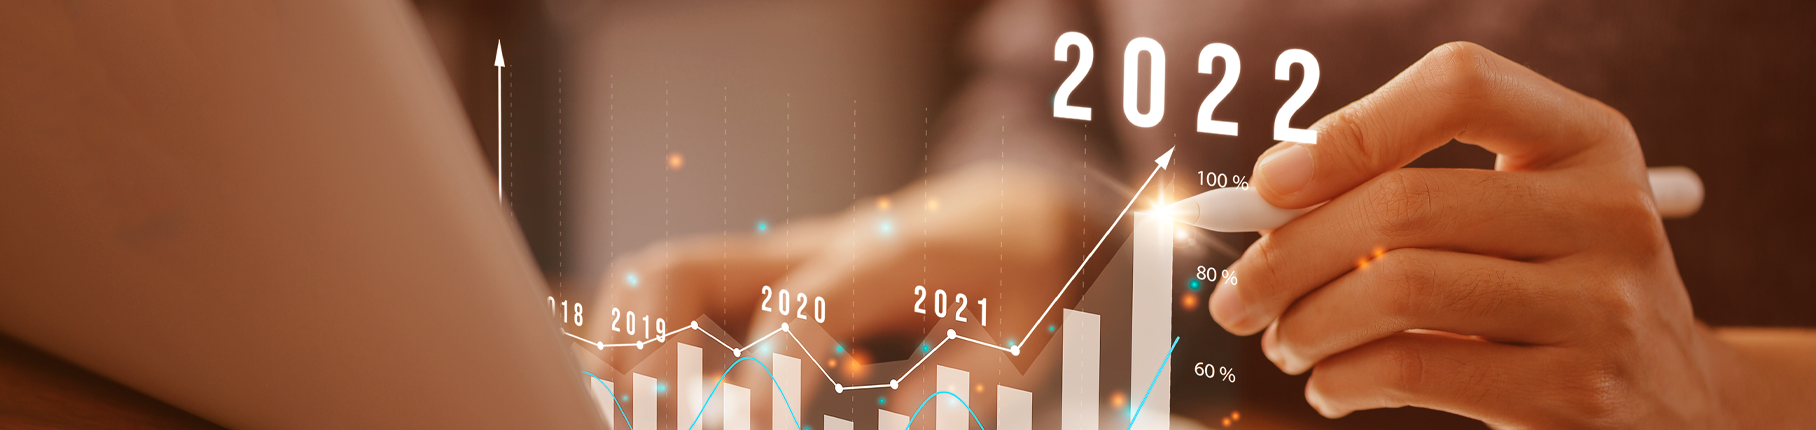 2022-Digital-Asset-Securities-Predictions